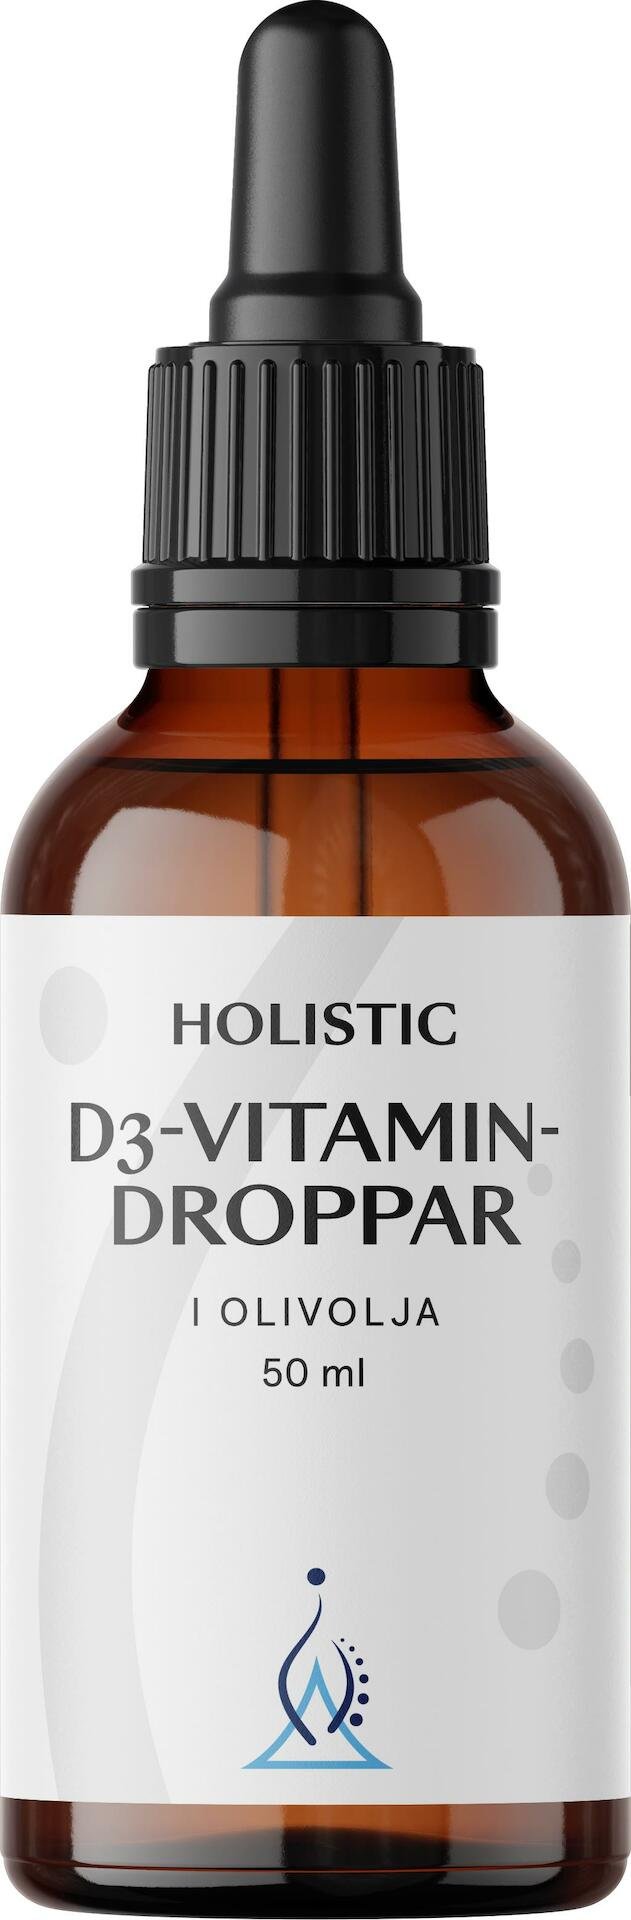 Holistic D3-vitamindroppar 50 ml